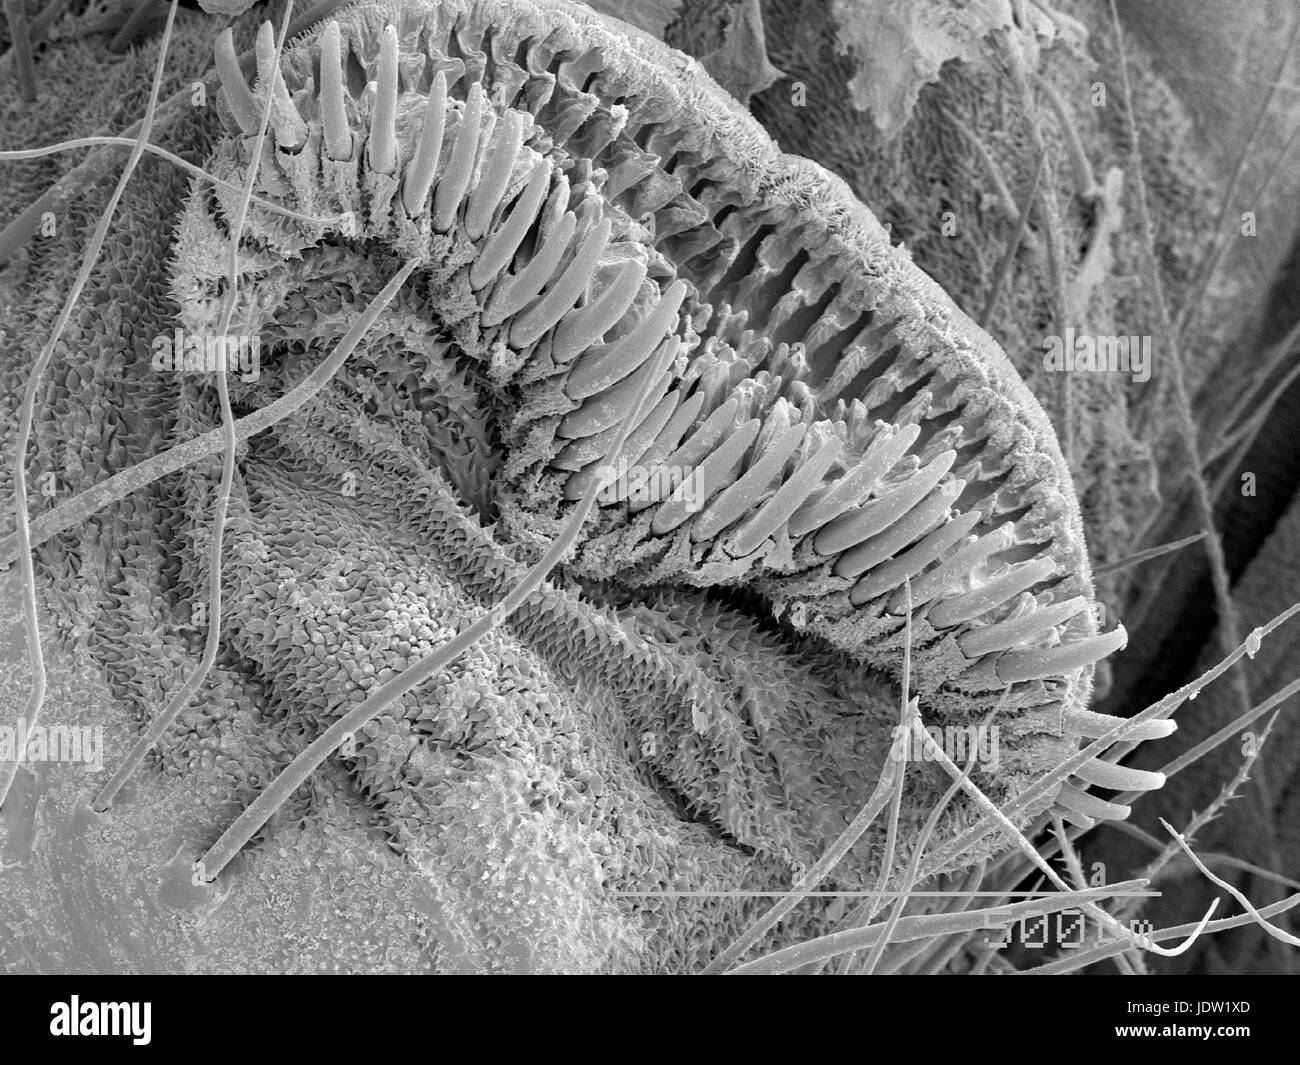 Magnified view of proleg of caterpillar Stock Photo